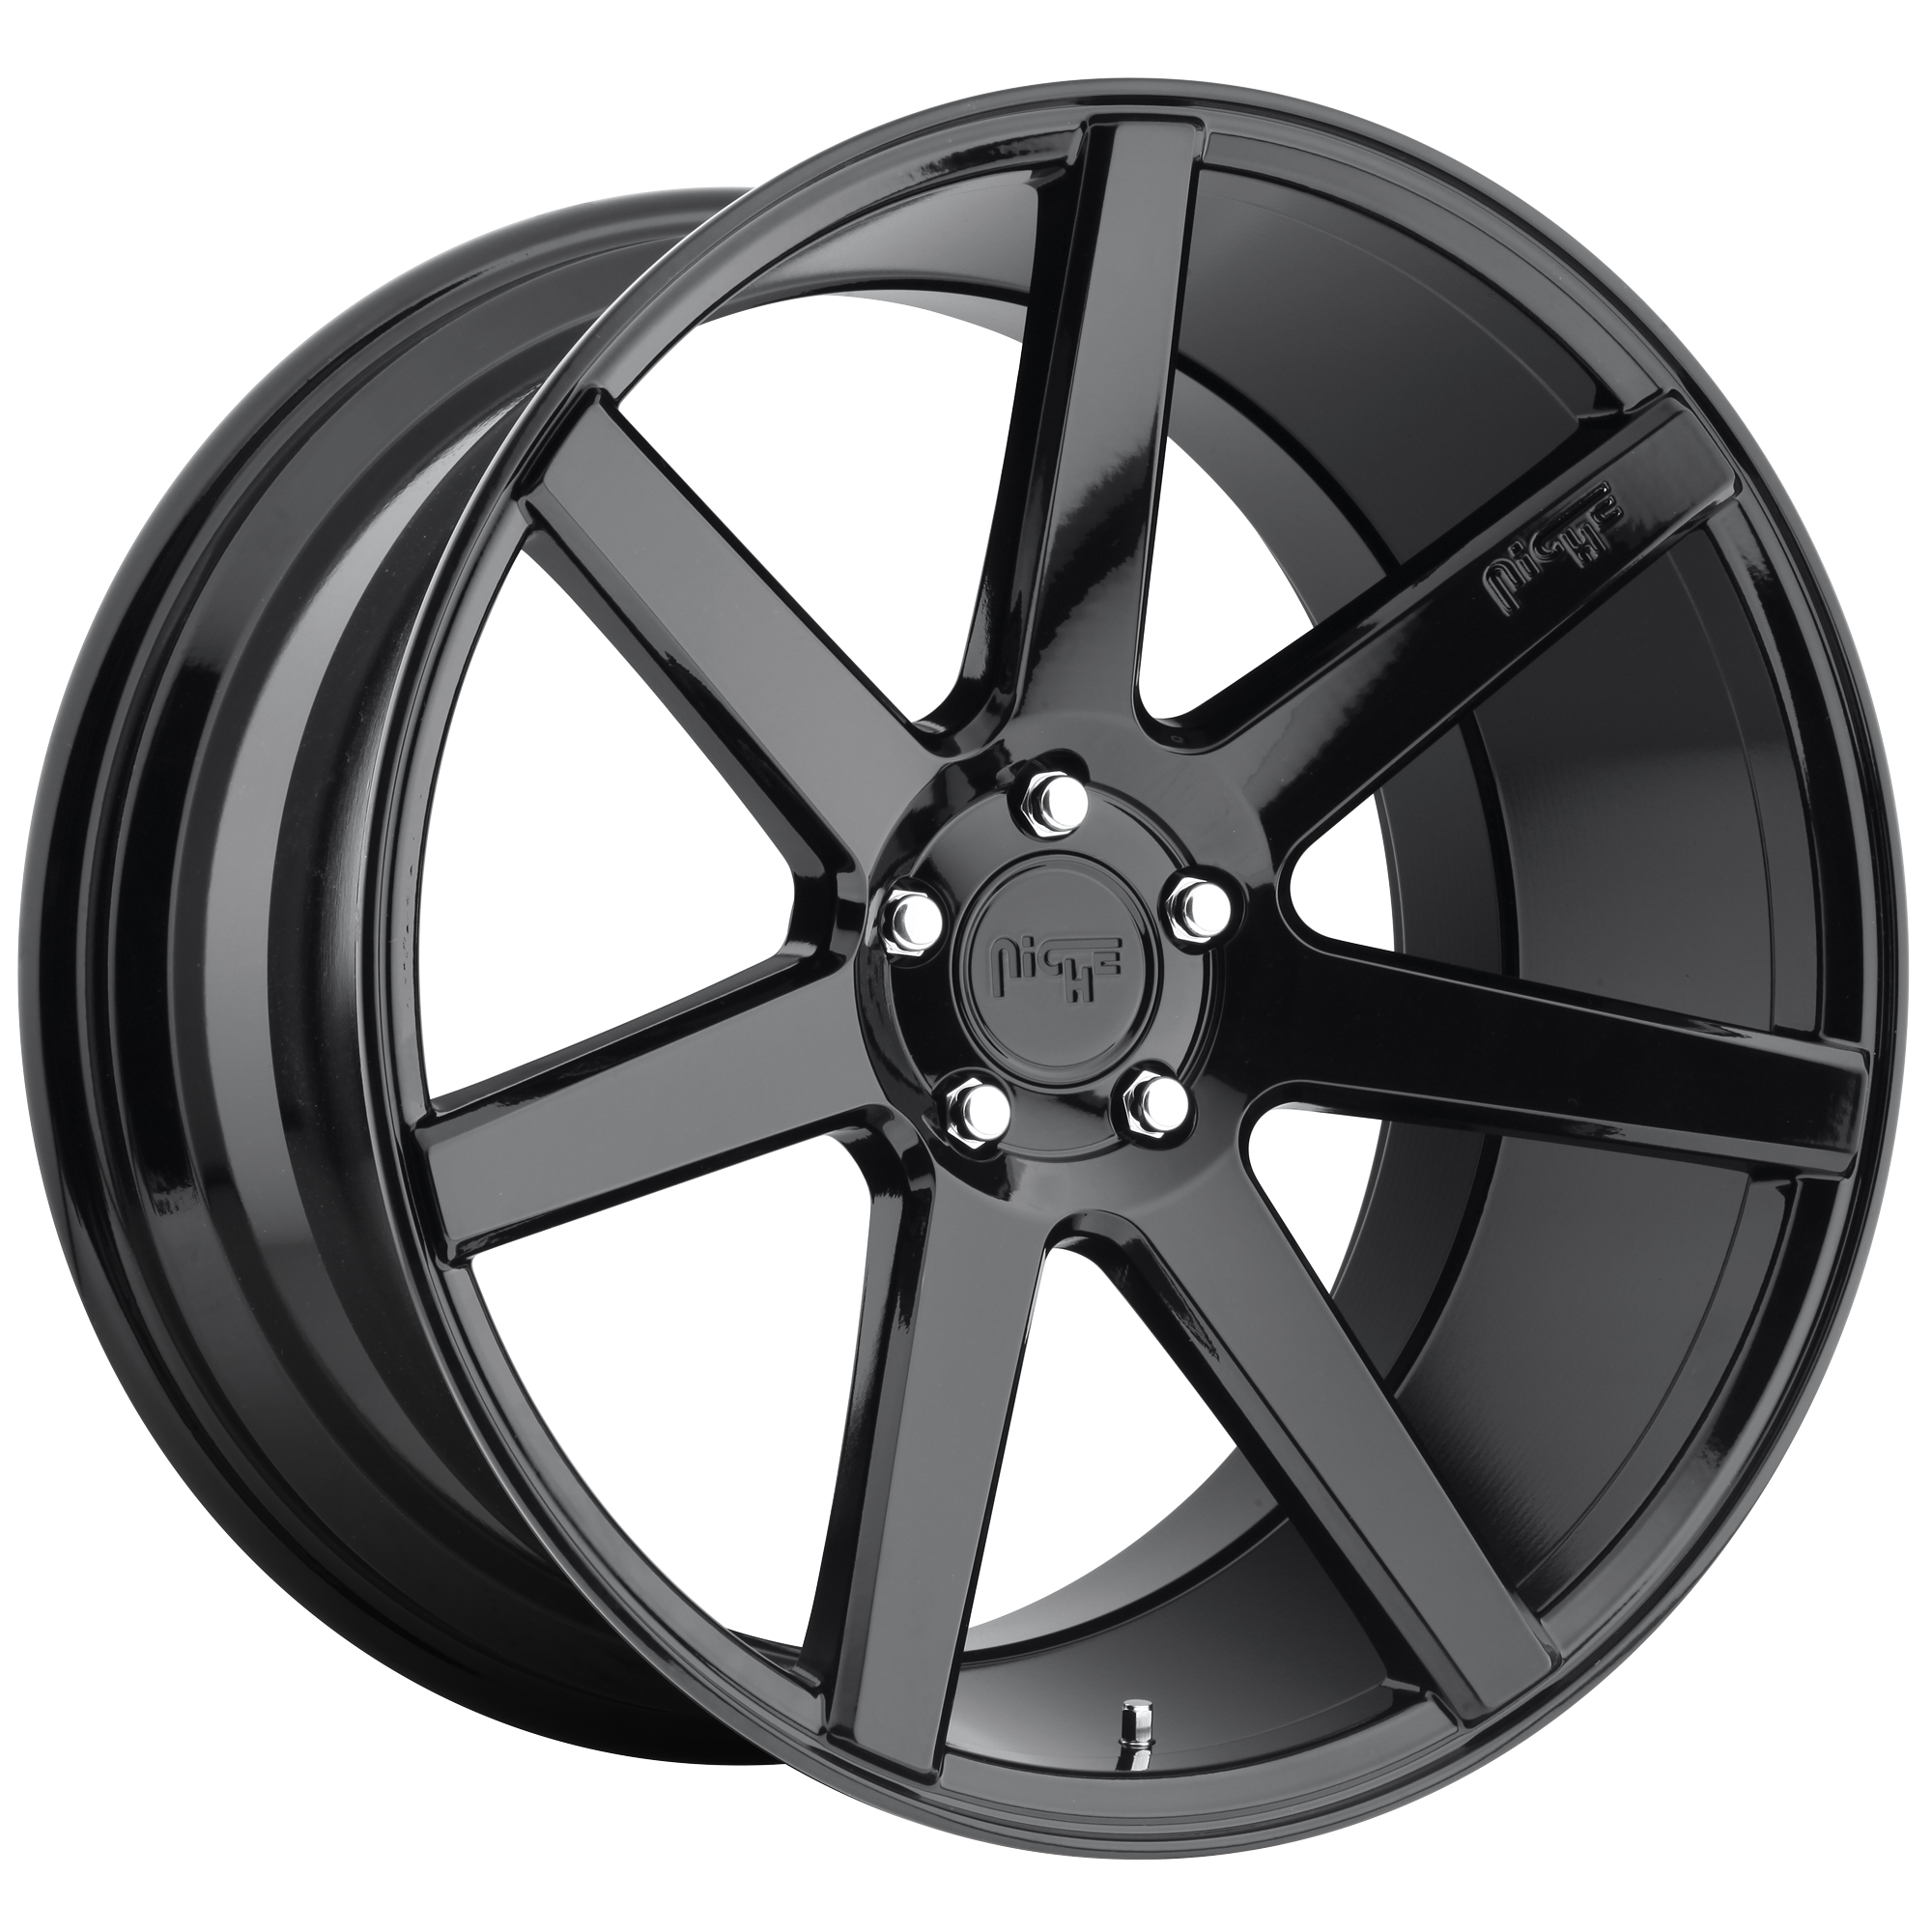 VERONA 19x8.5 5x114.30 GLOSS BLACK (35 mm) - Tires and Engine Performance